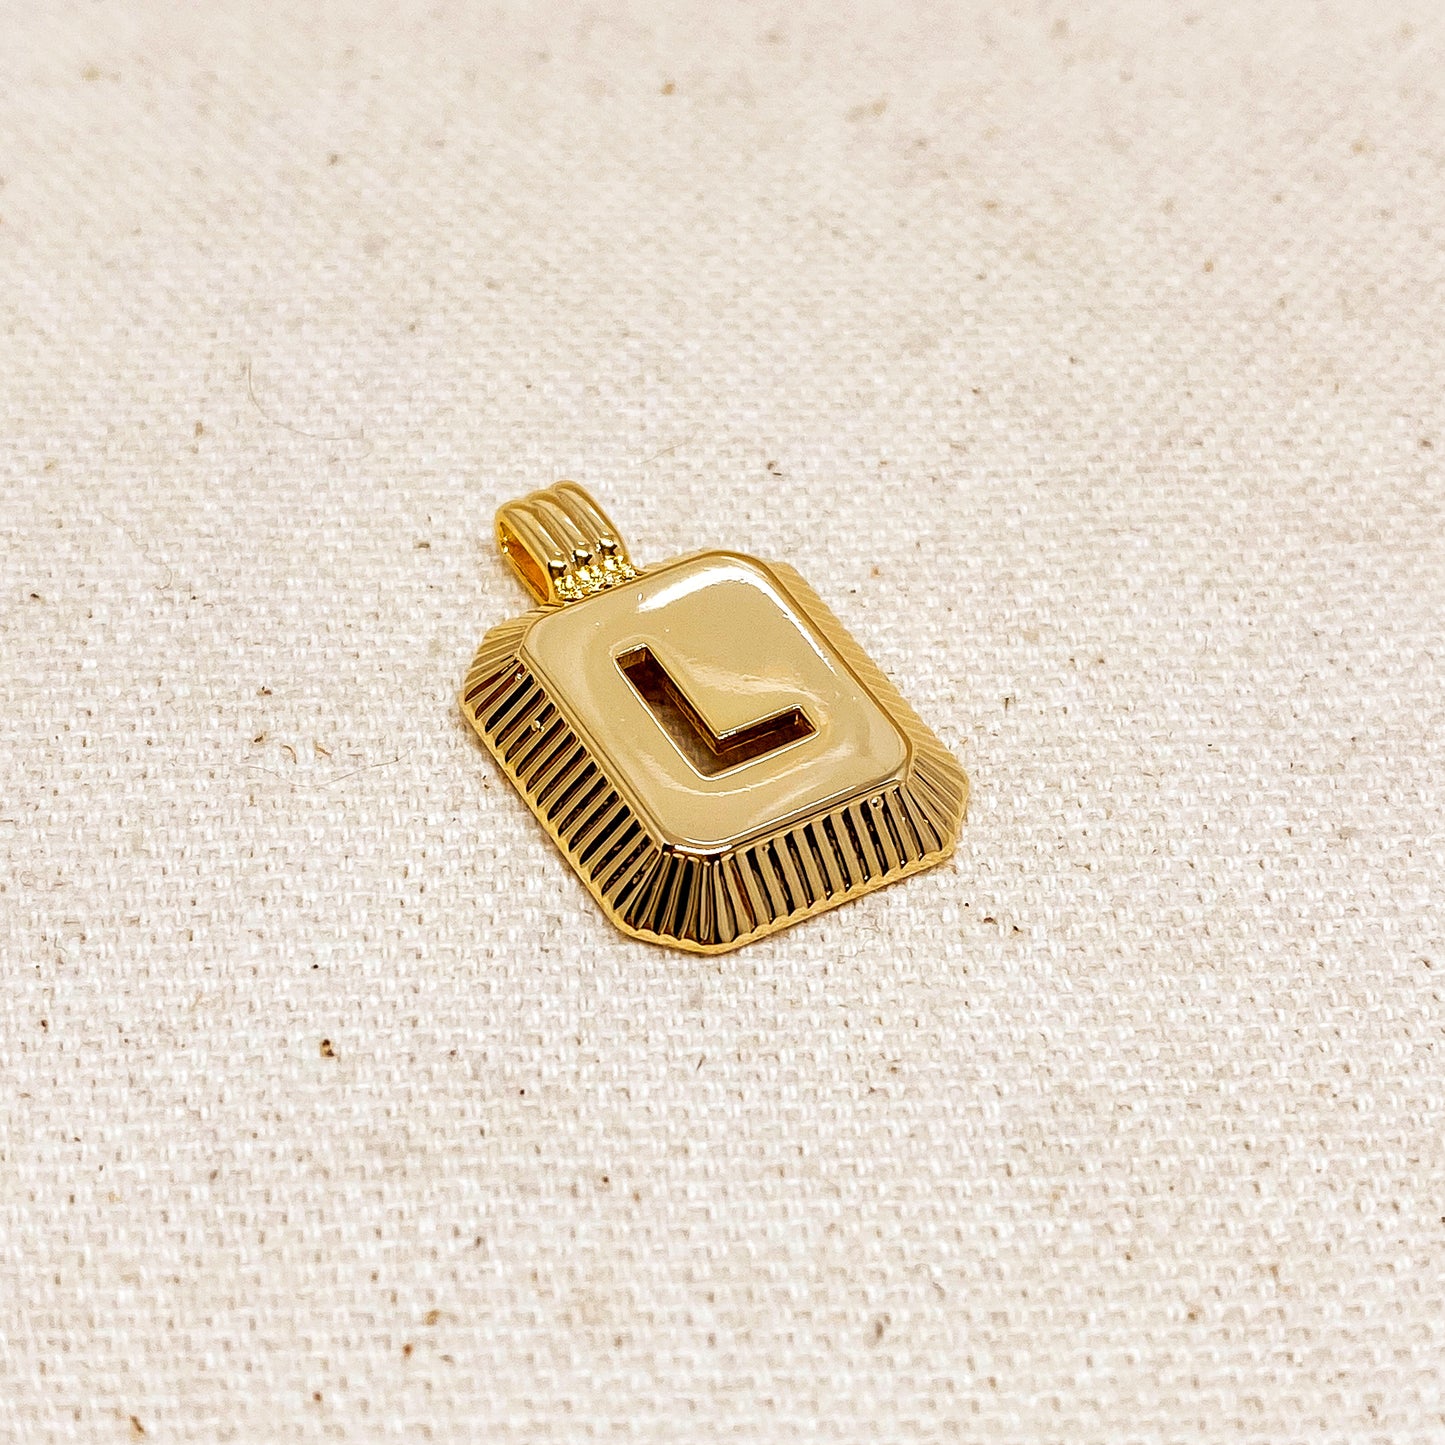 GoldFi 18k Gold Filled Initial Plate Pendant Letter L